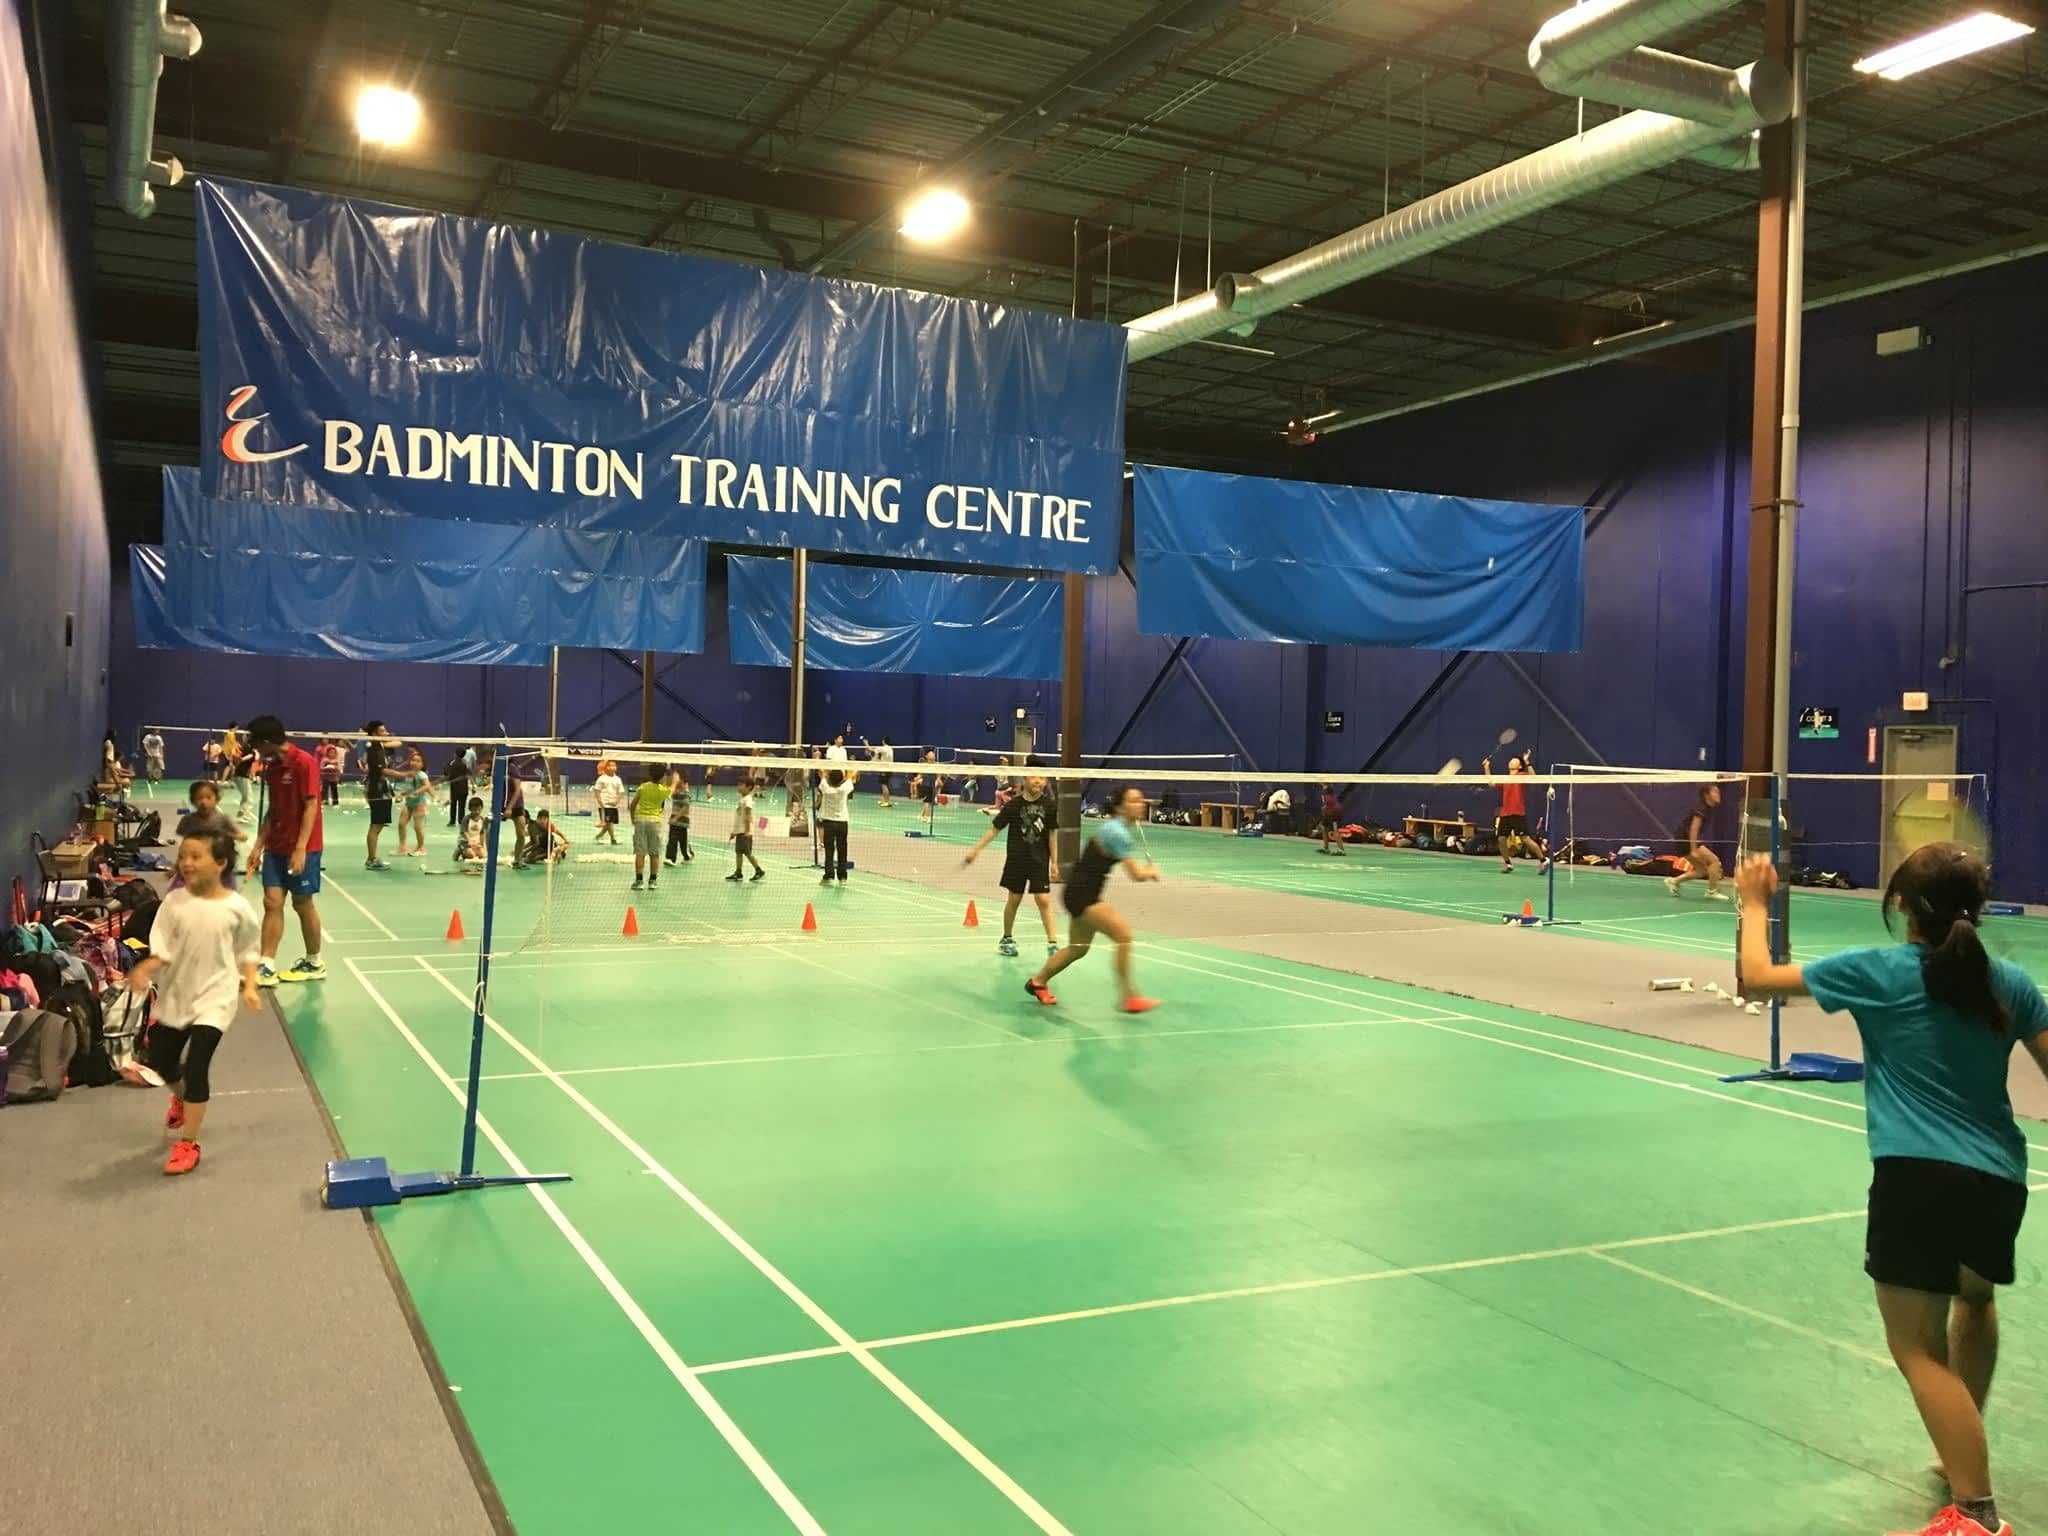 photo E Badminton Training Centre